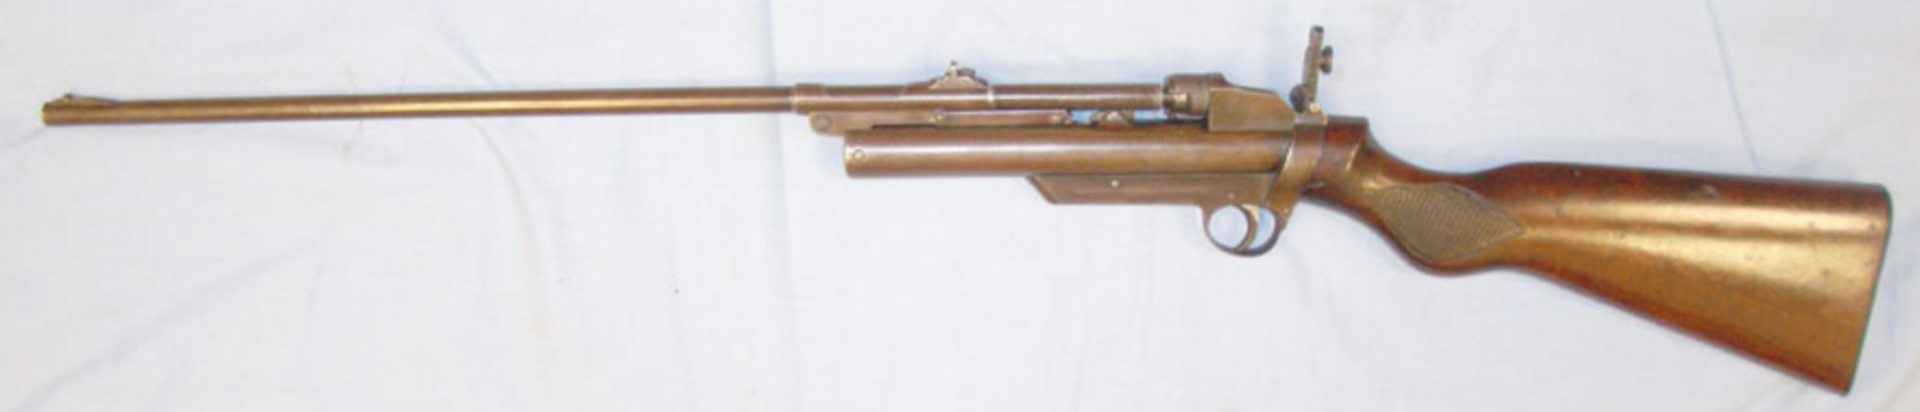 1930's Webley Service MK II .22 Calibre Air Rifle - Image 3 of 3